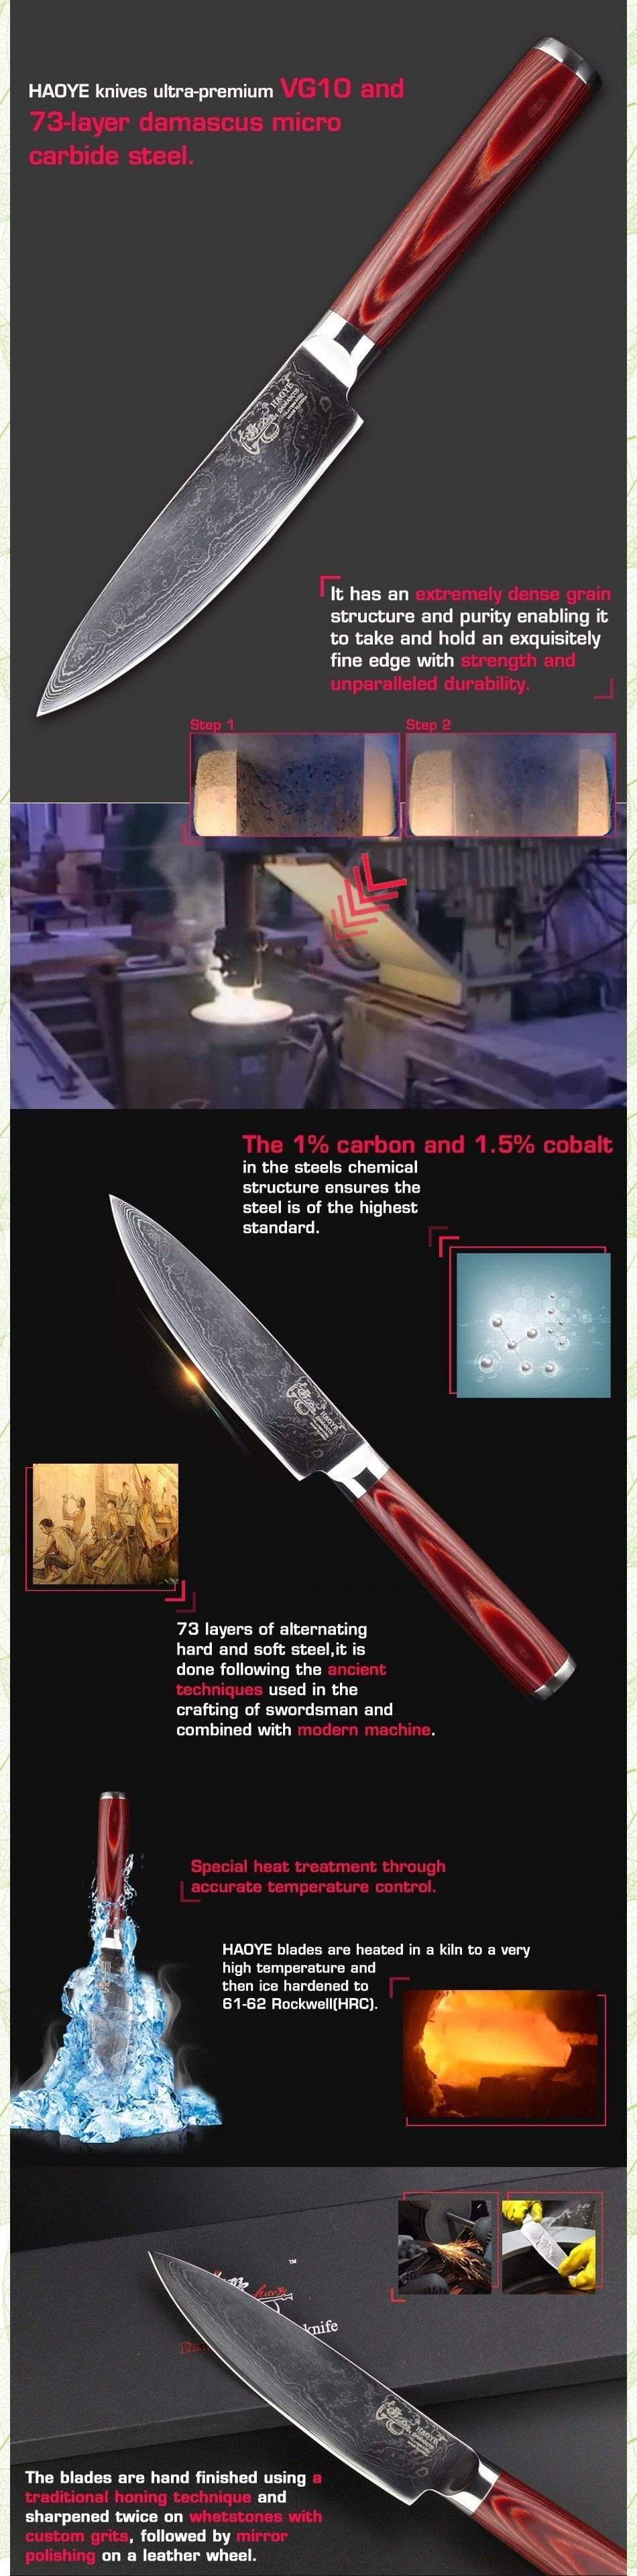 Steak Knife